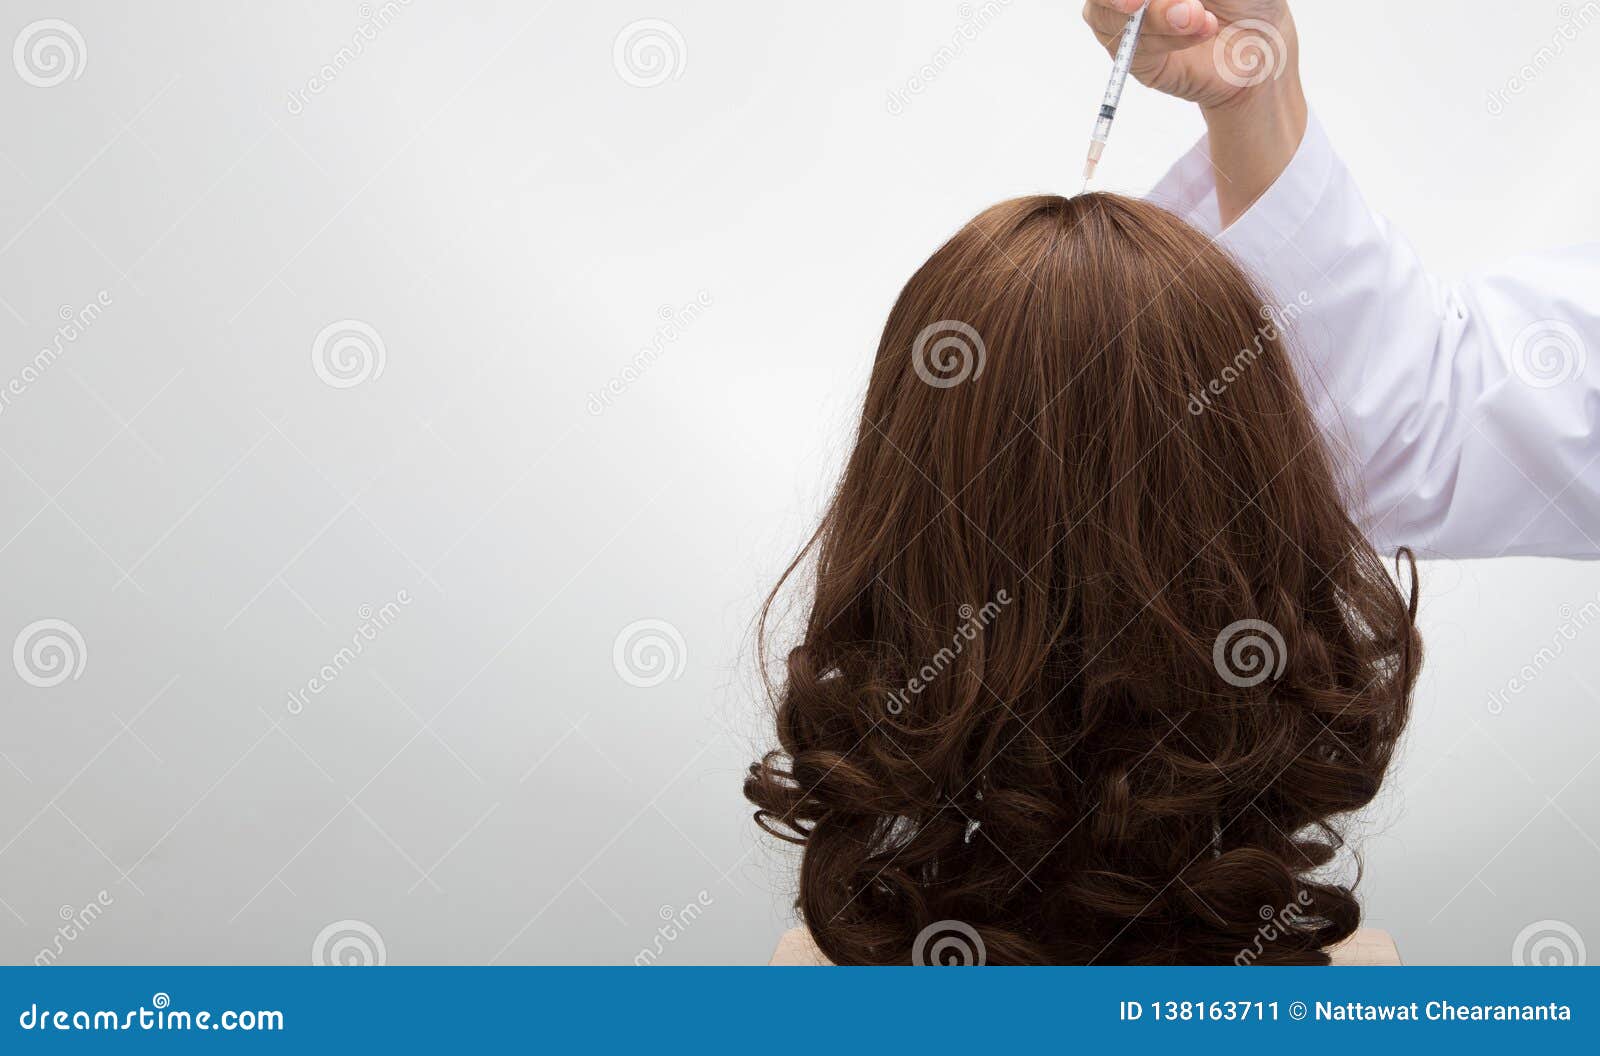 Doctor Inject Treatment Serum Vitamins Hair Fall Stock Image - Image of  needle, alopecia: 138163711